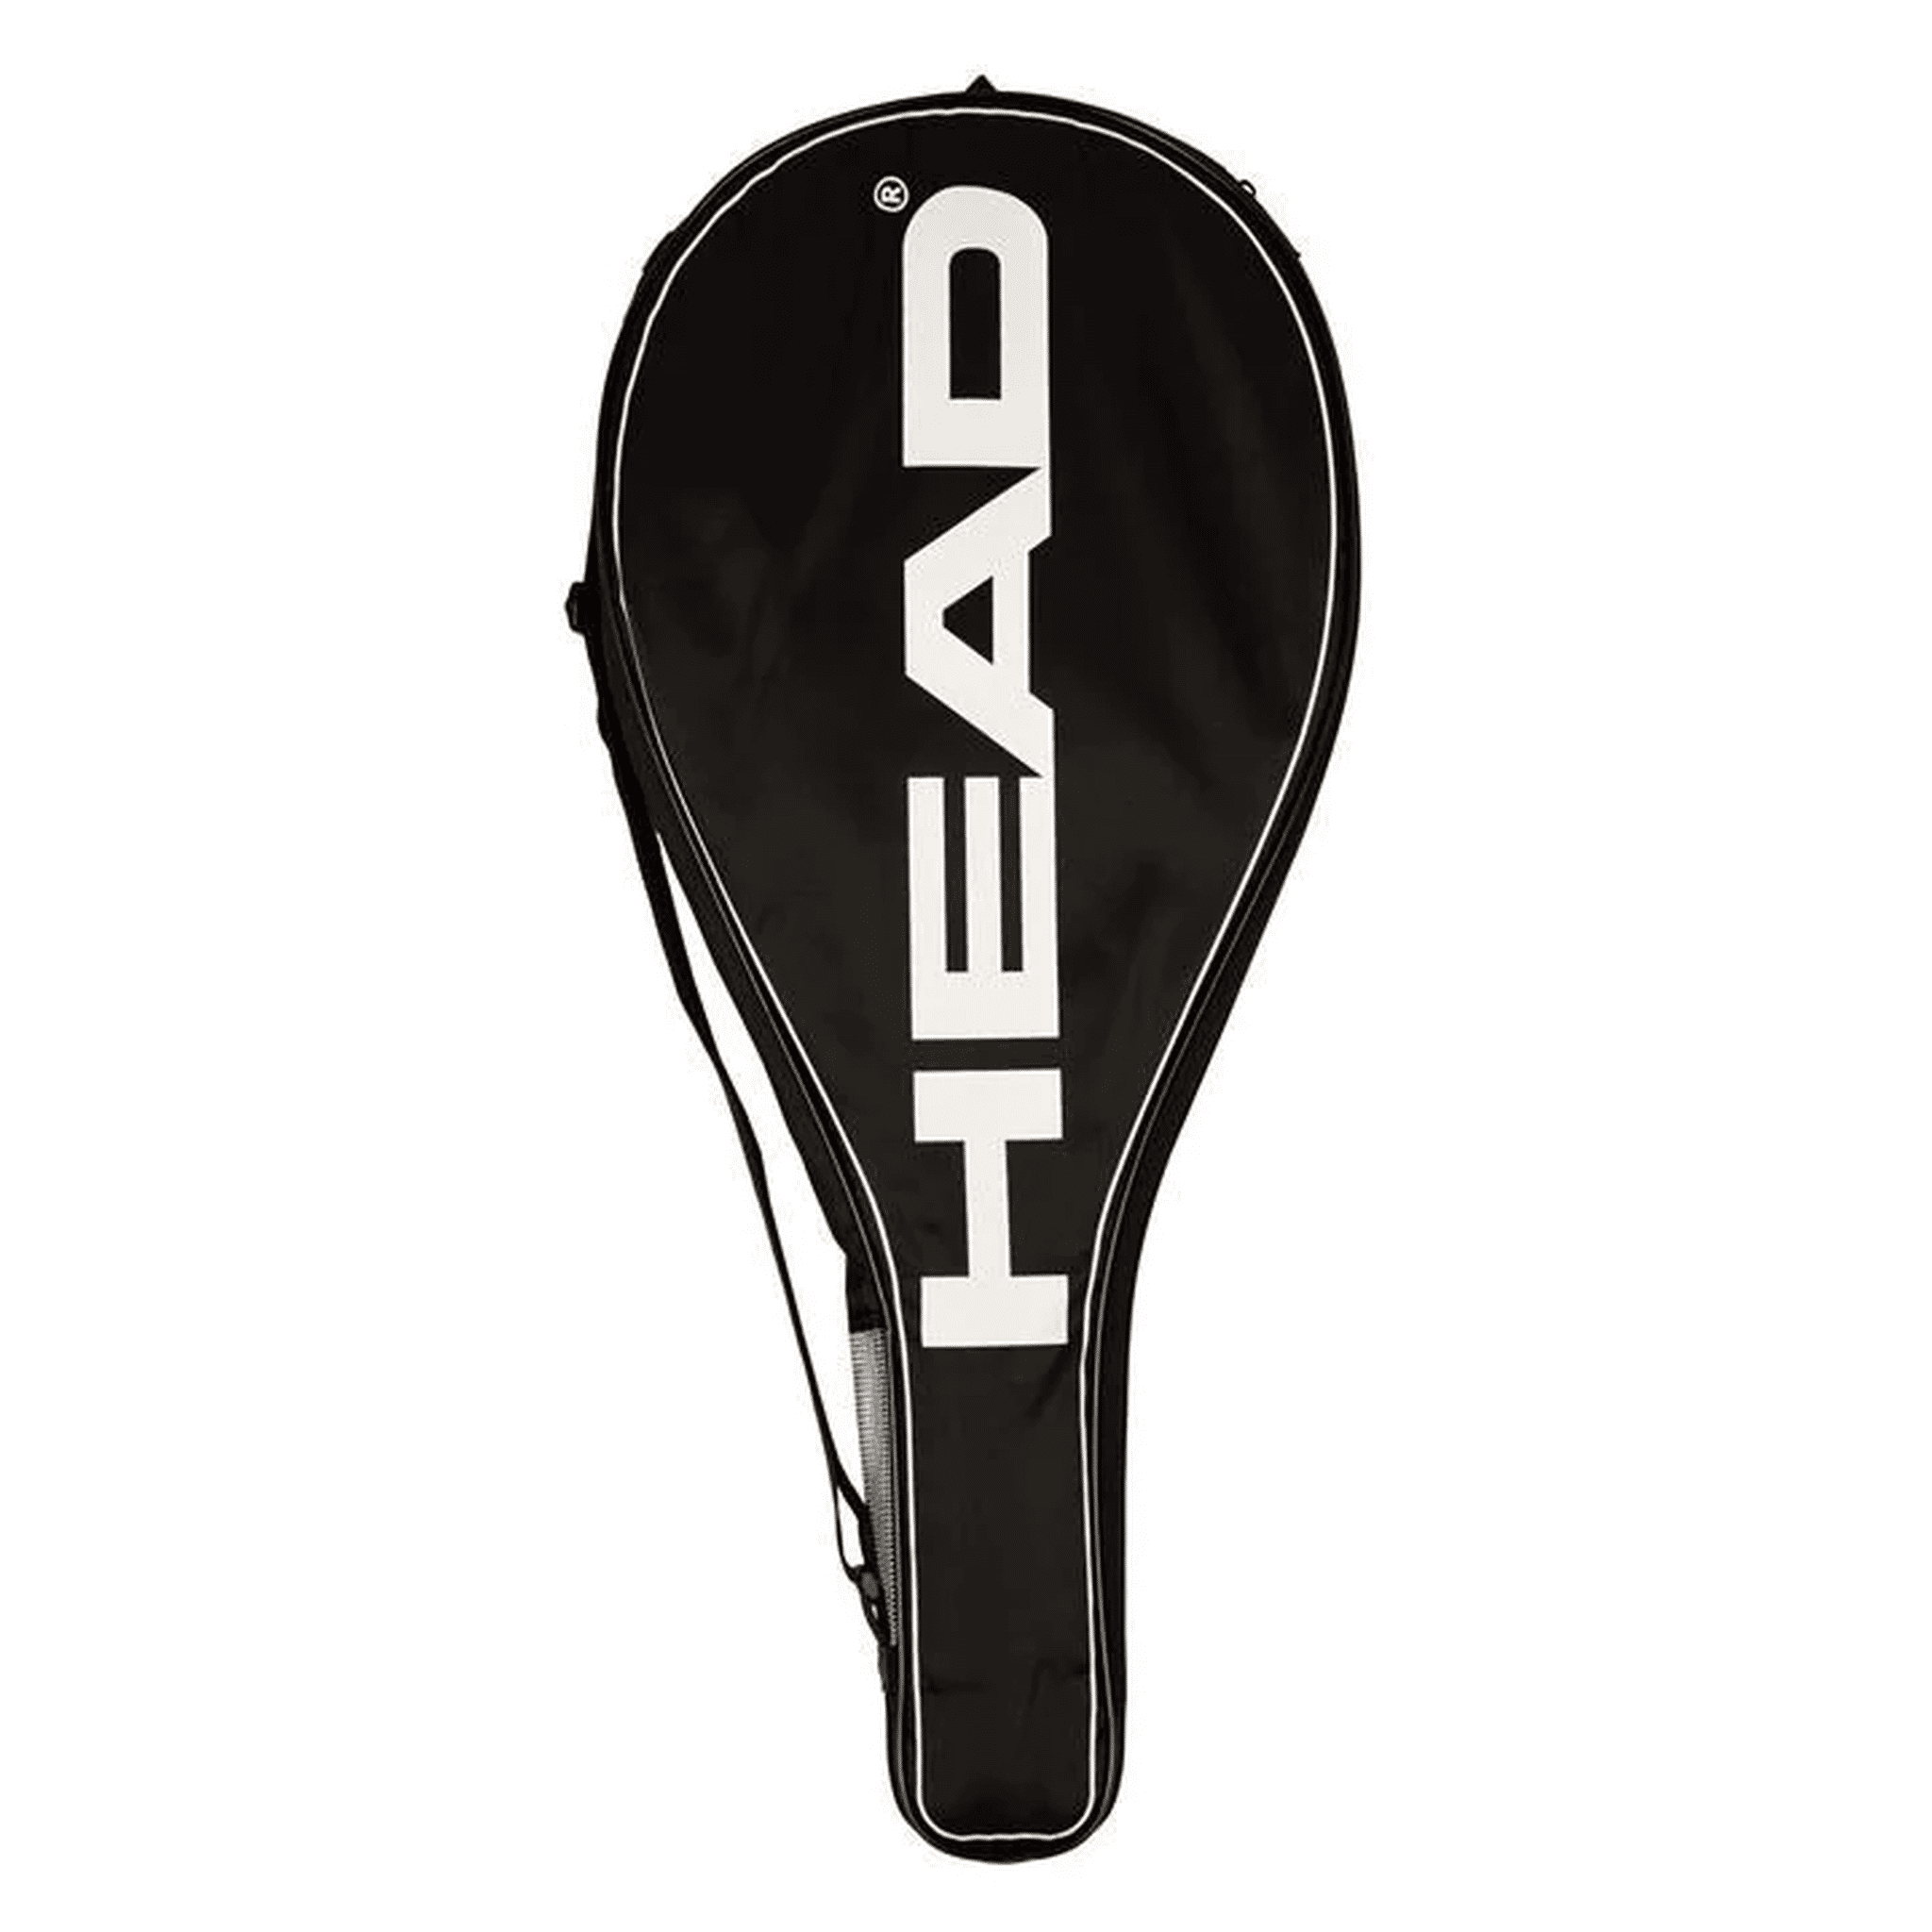 Head tennis racket cover